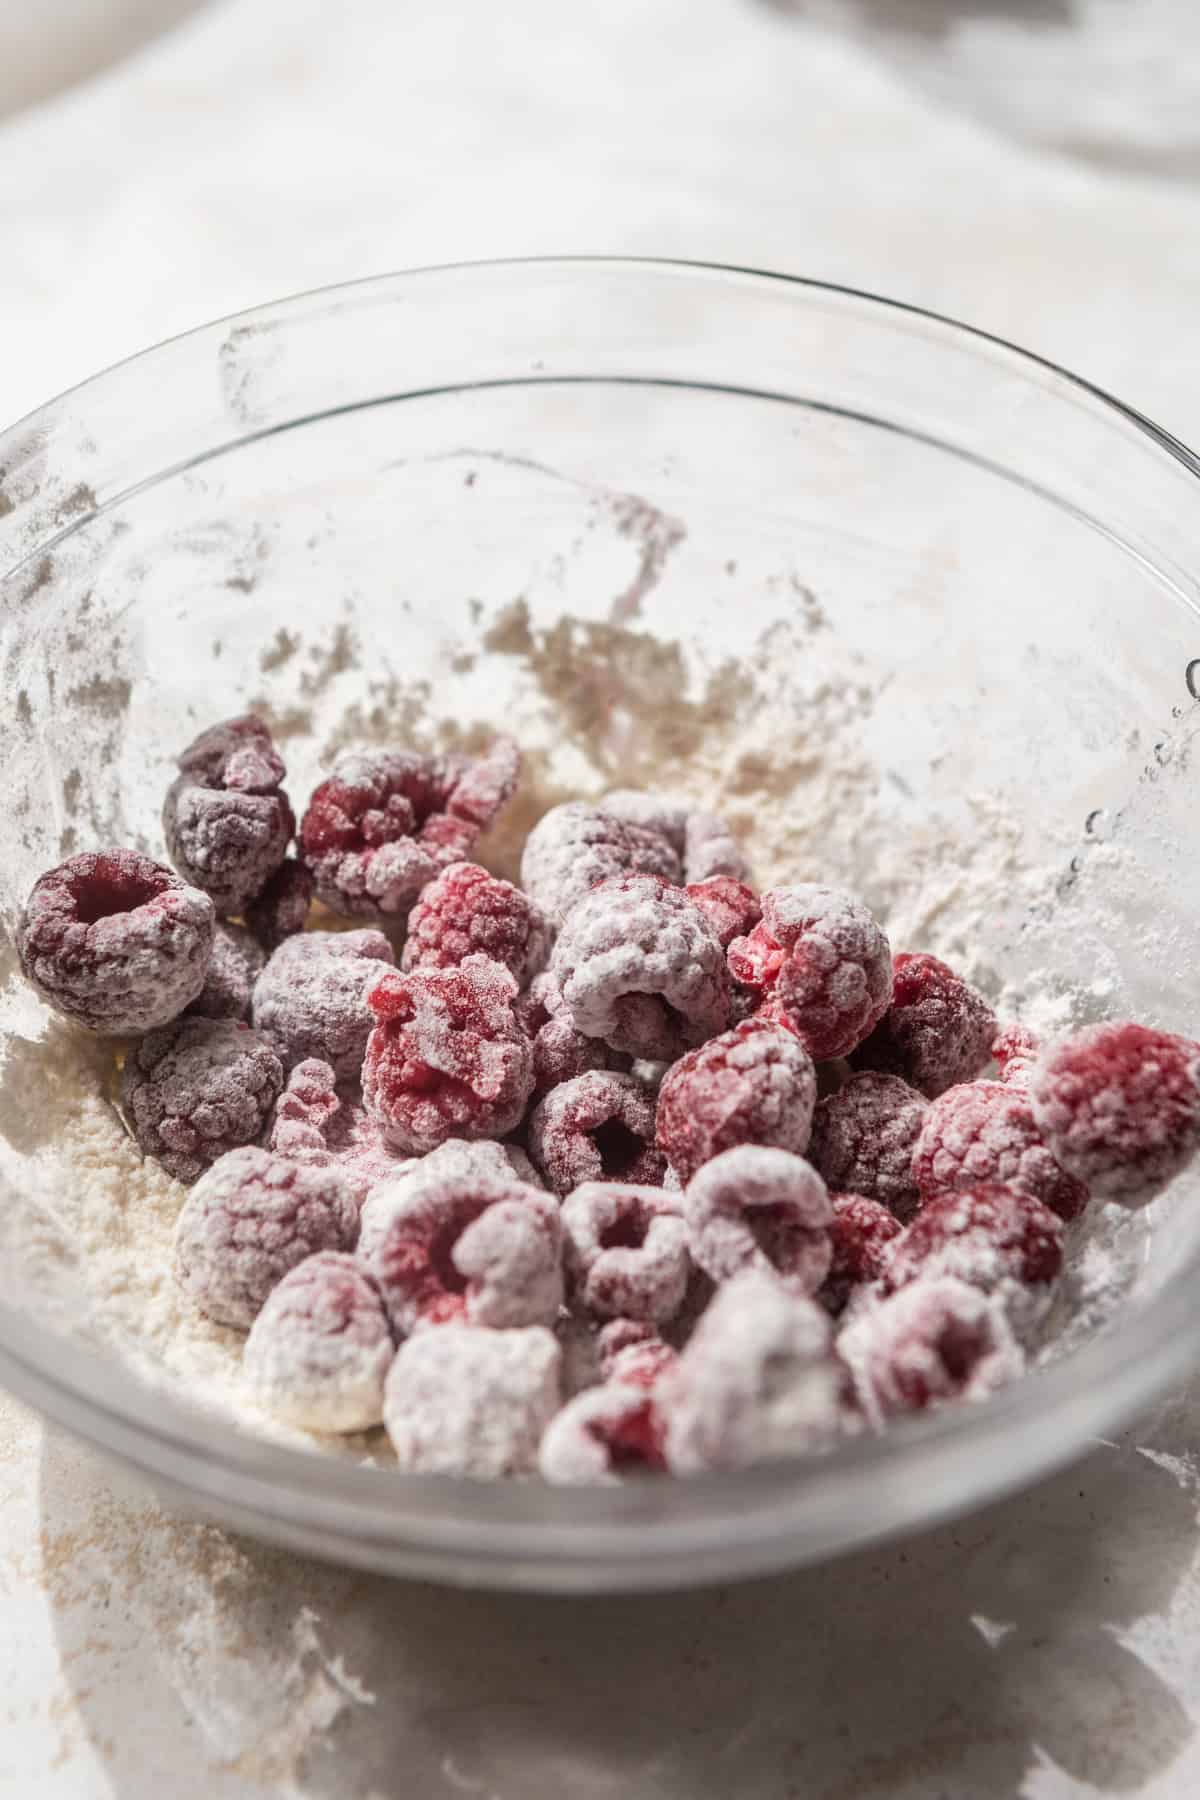 Raspberries coated with flour.